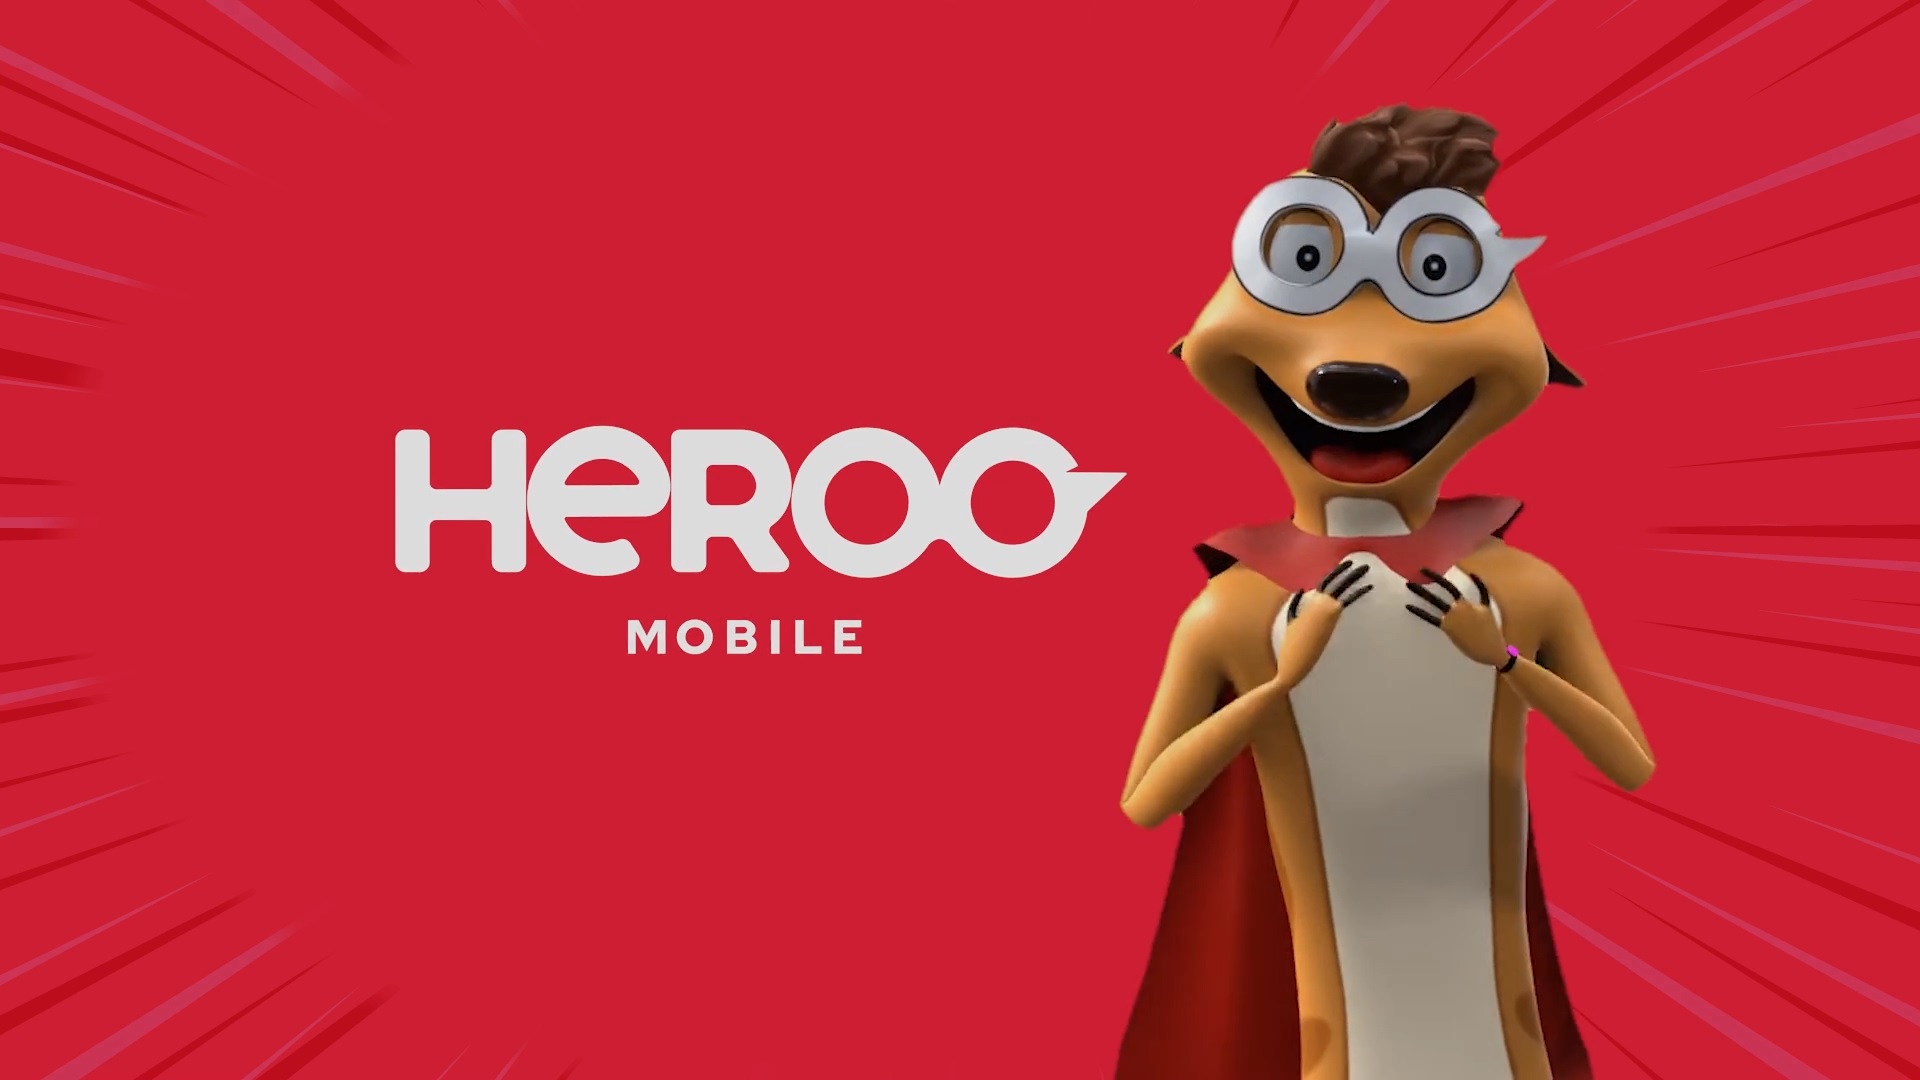 Heroo Mobile logo